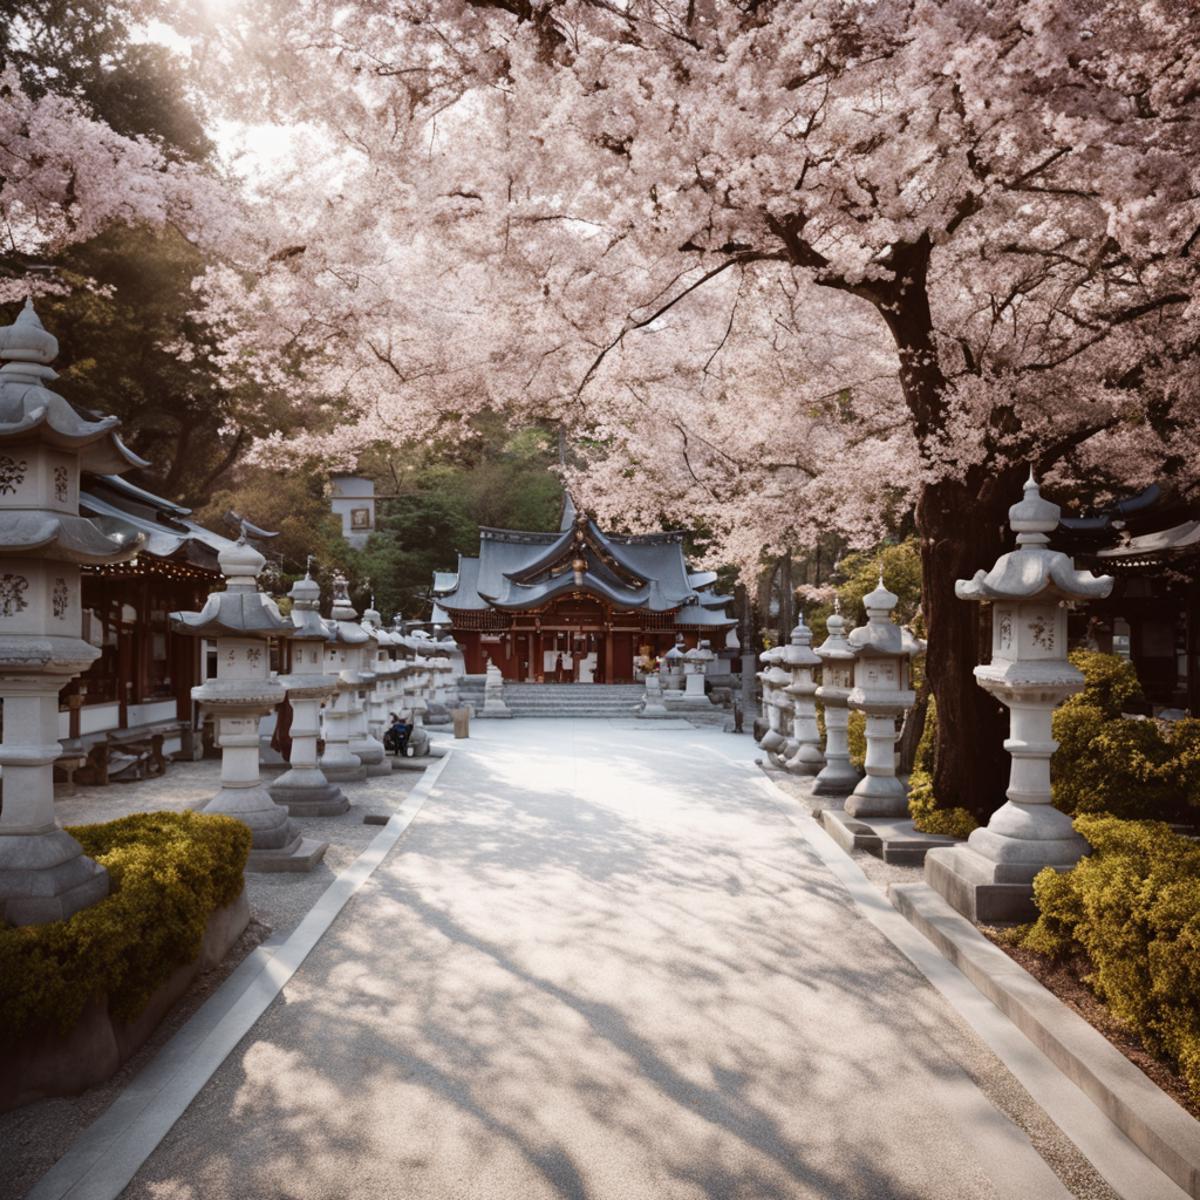 神社 Jinja / shrine SDXL image by swingwings